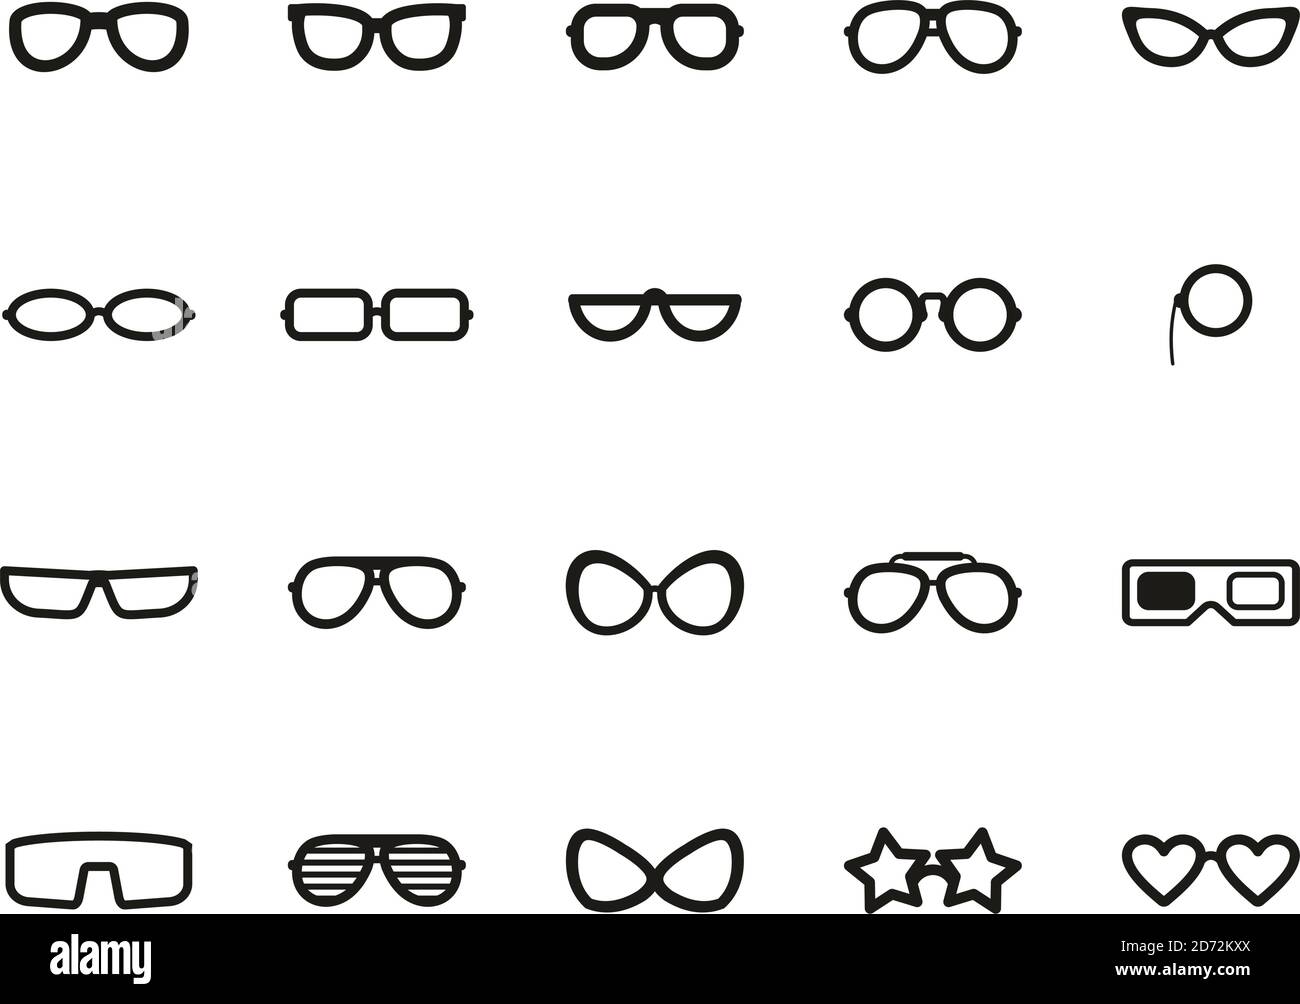 Eyeglasses & Sunglasses Icons Black & White Set Big Stock Vector Image ...